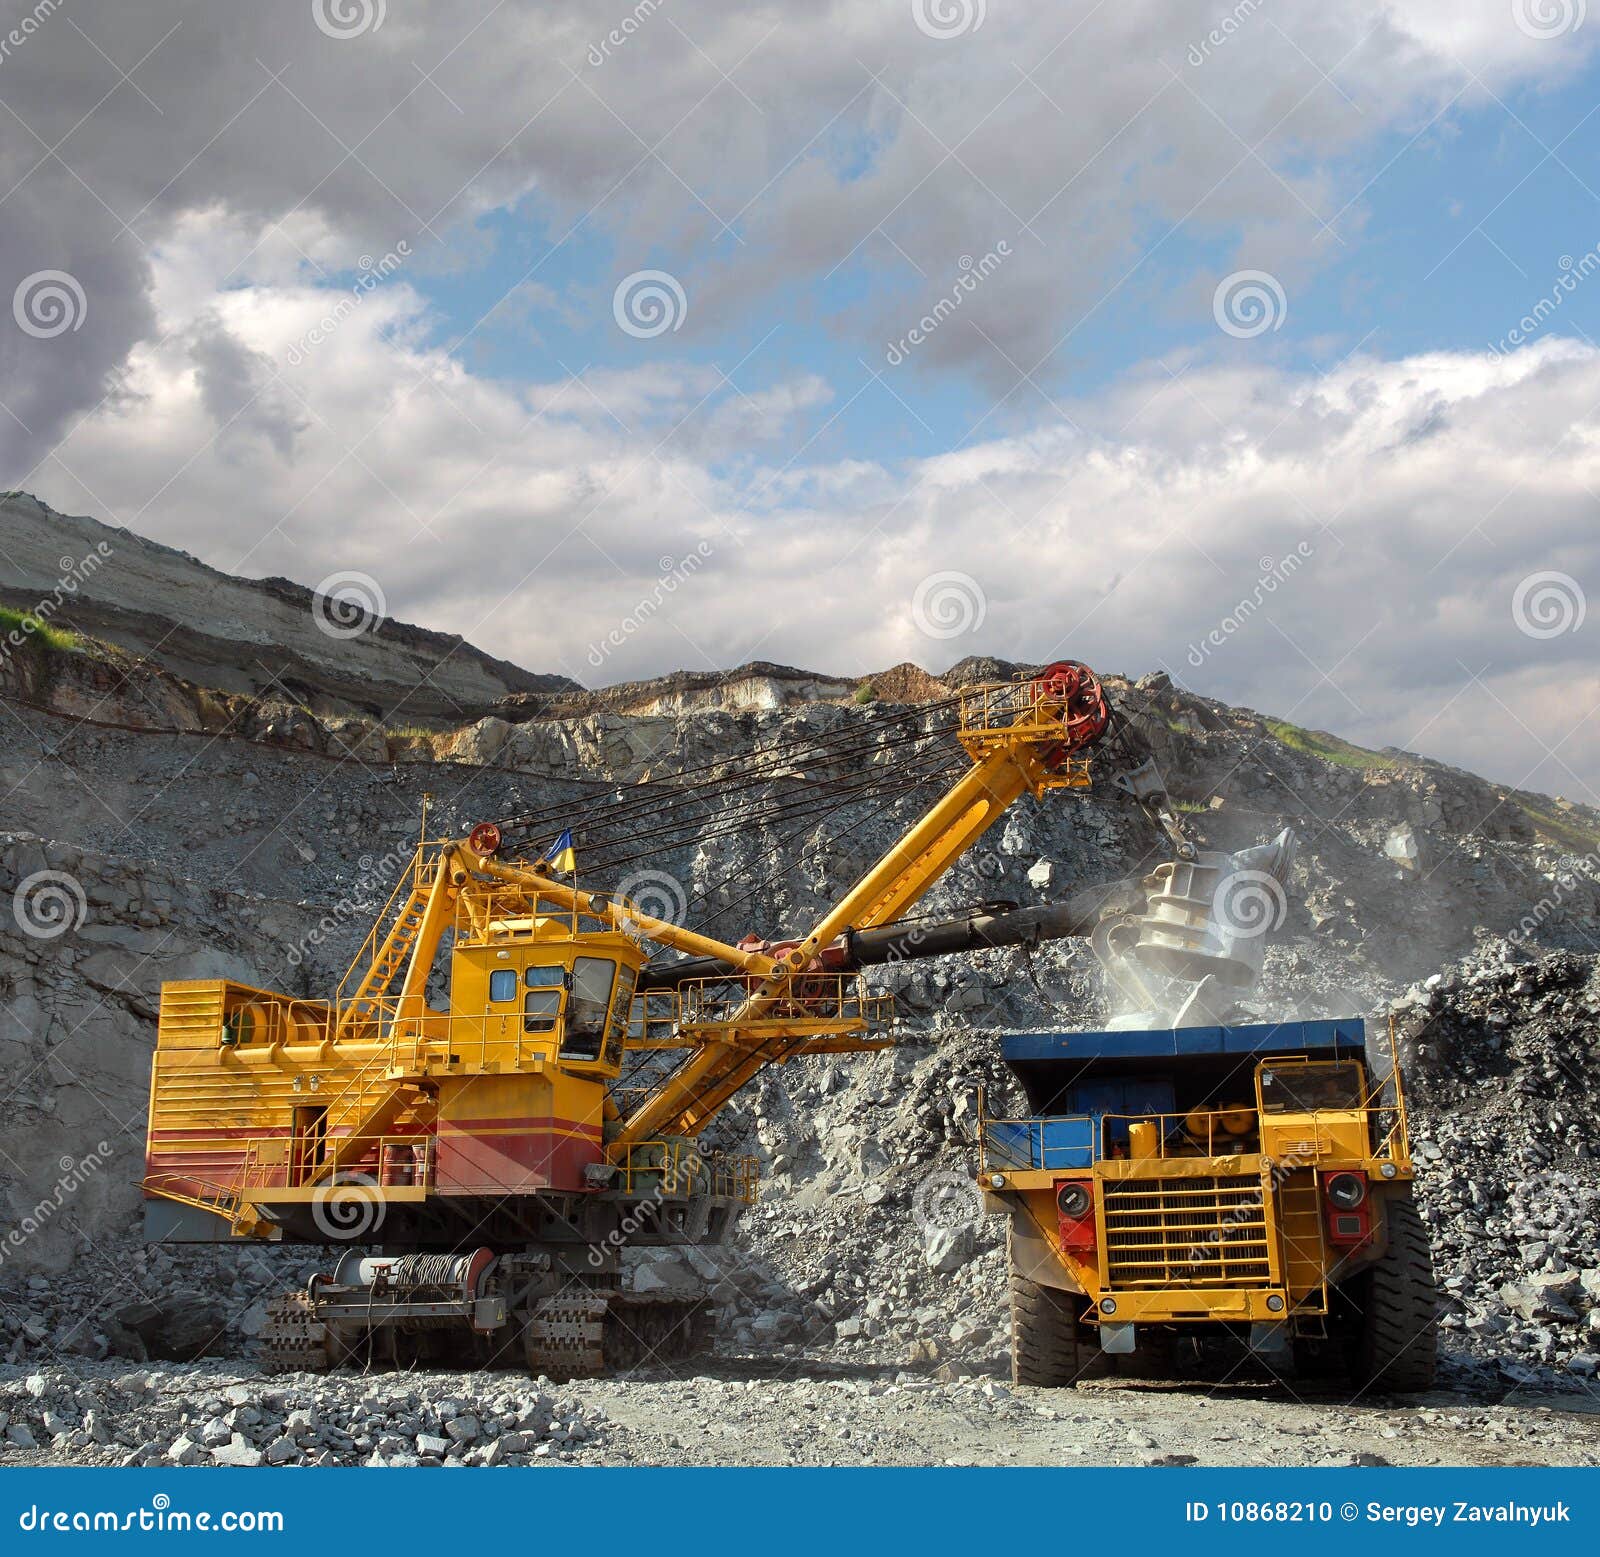 loading of iron ore